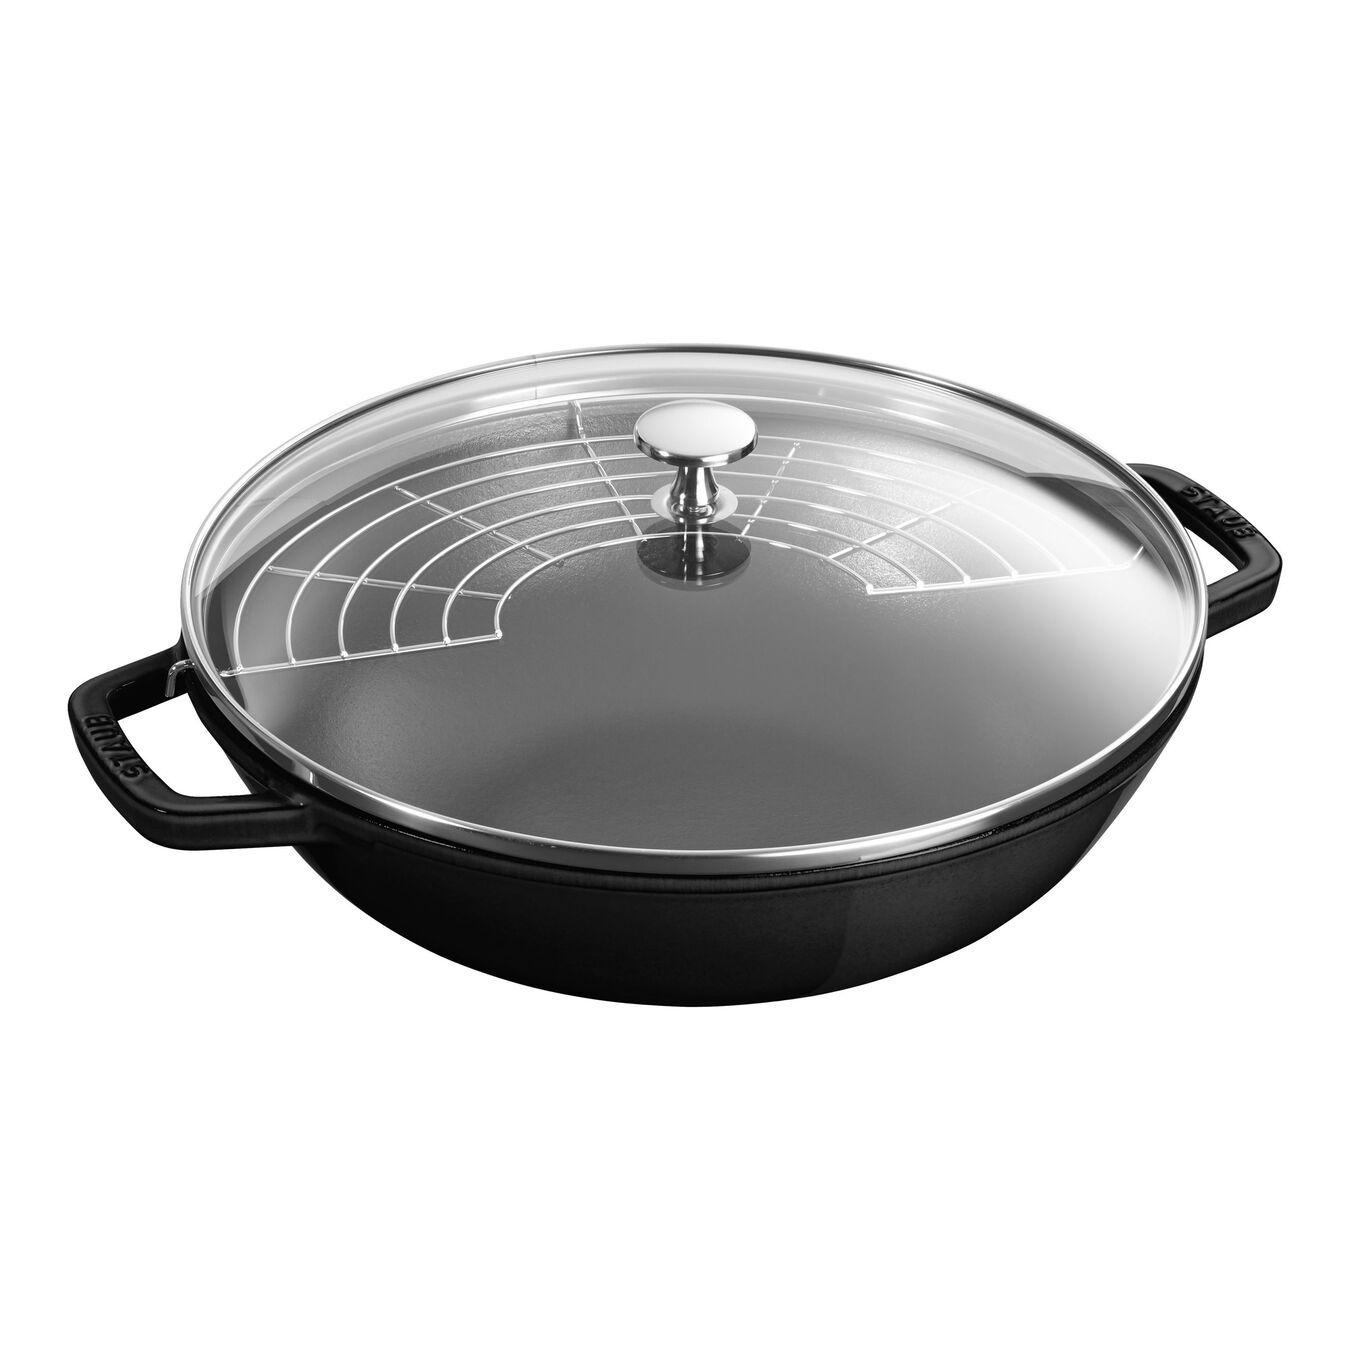 30 cm Cast iron Wok with glass lid black,,large 1